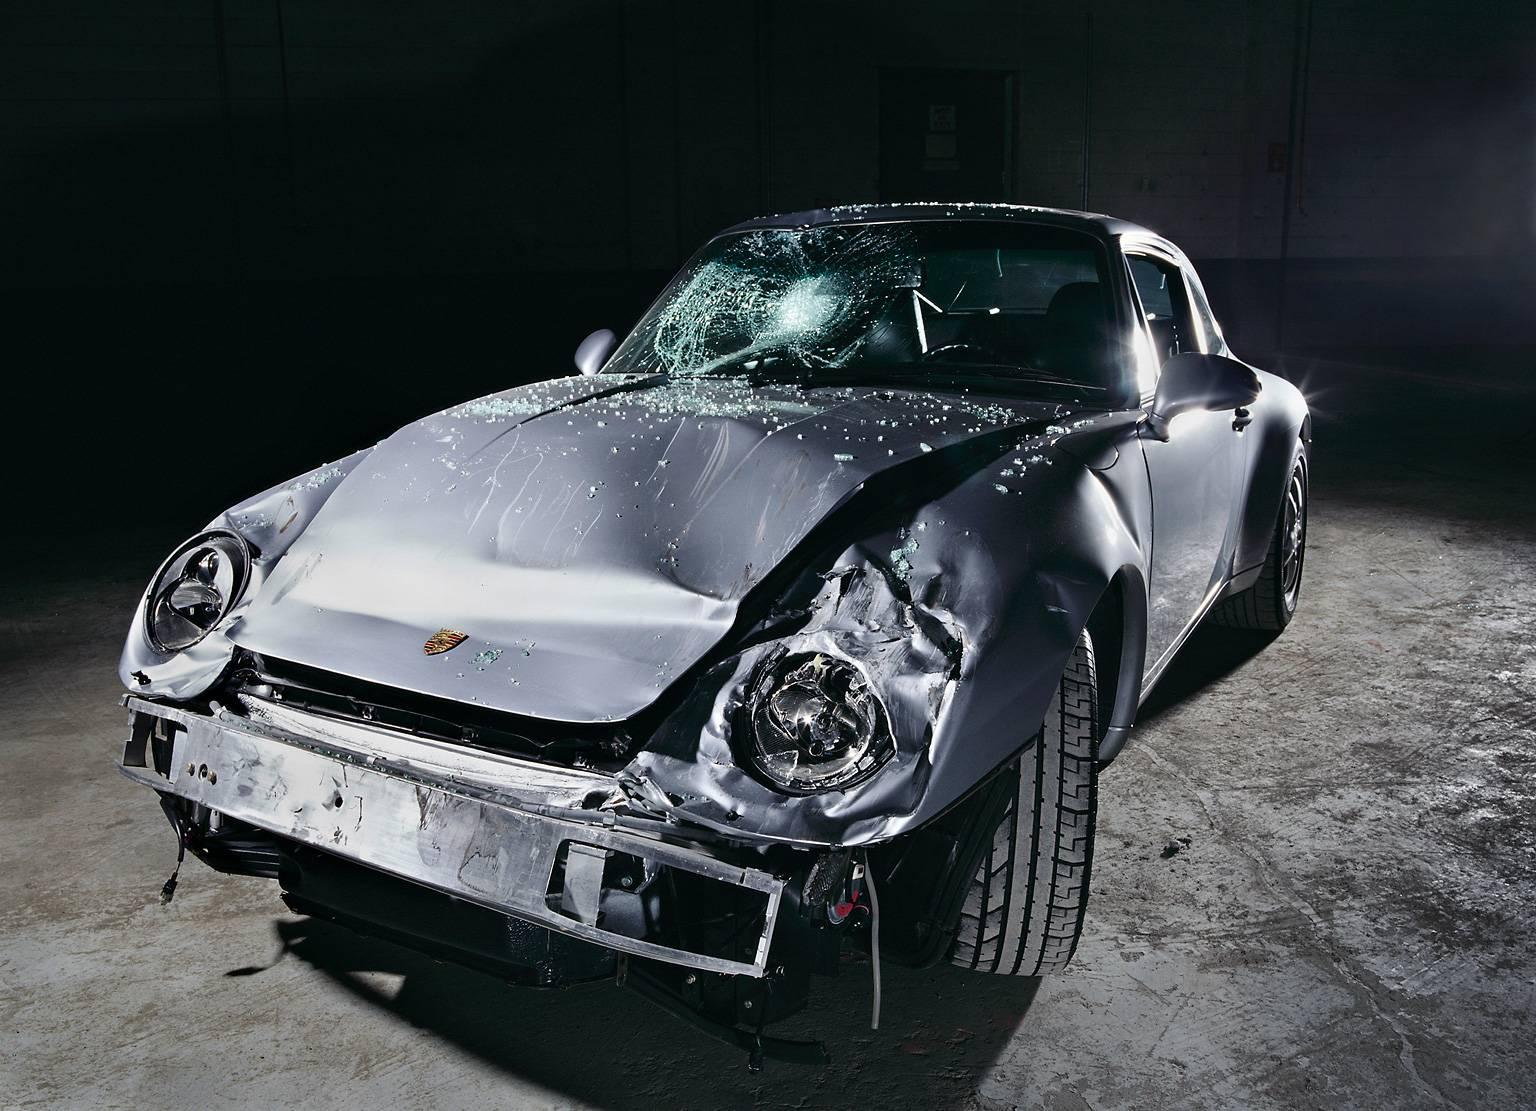 Frank Schott Color Photograph - Nine-One-One (Porsche 911) - still life photograph of iconic crashed automobile